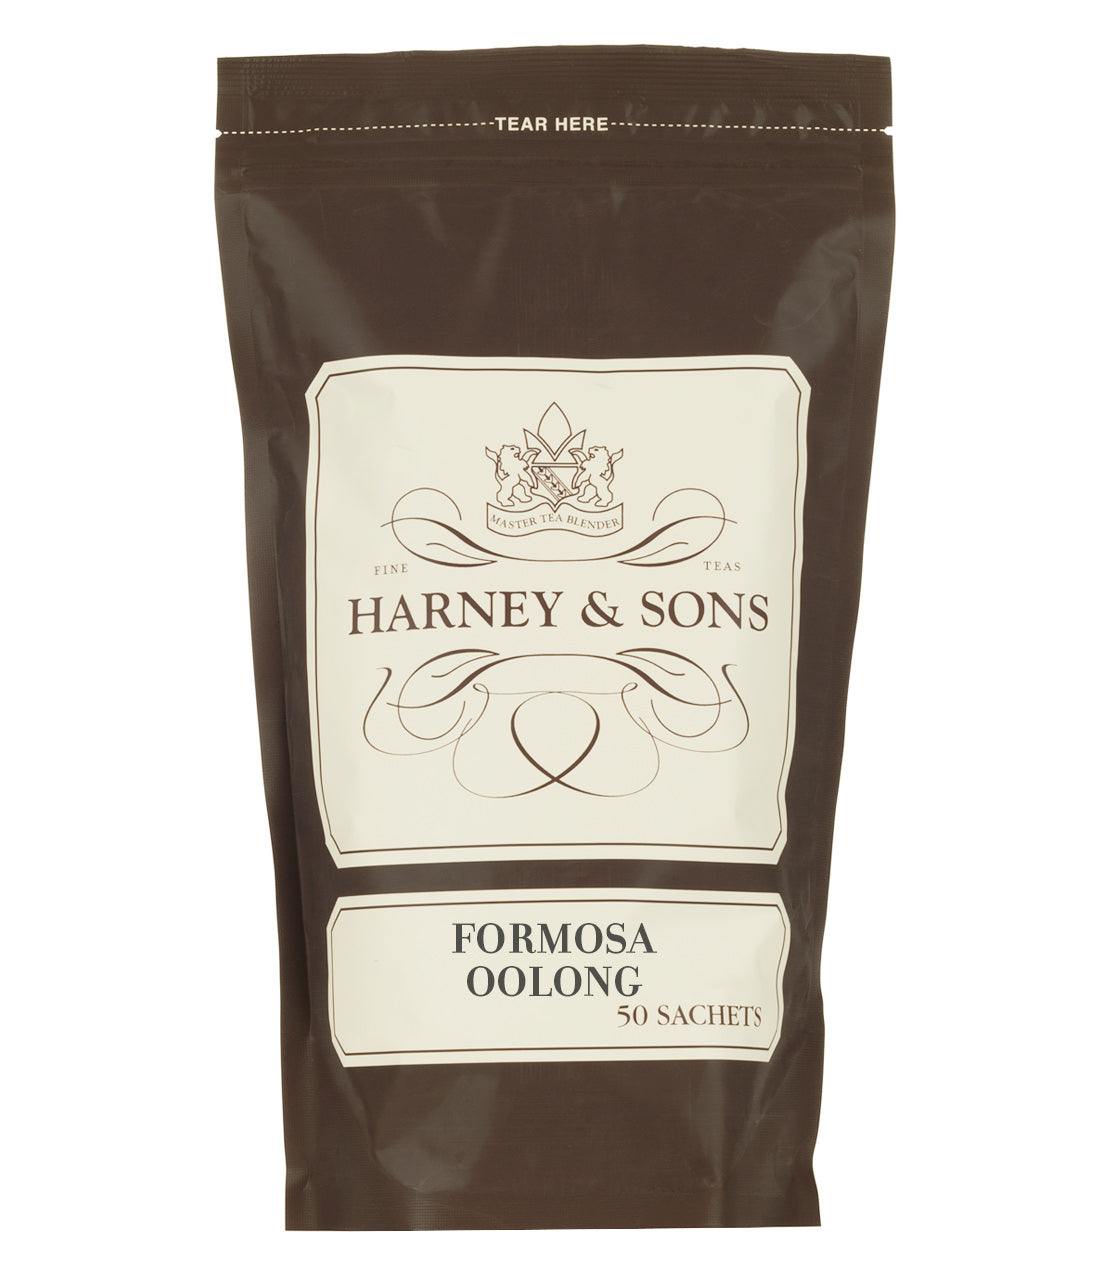 Formosa Oolong - Sachets Bag of 50 Sachets - Harney & Sons Fine Teas